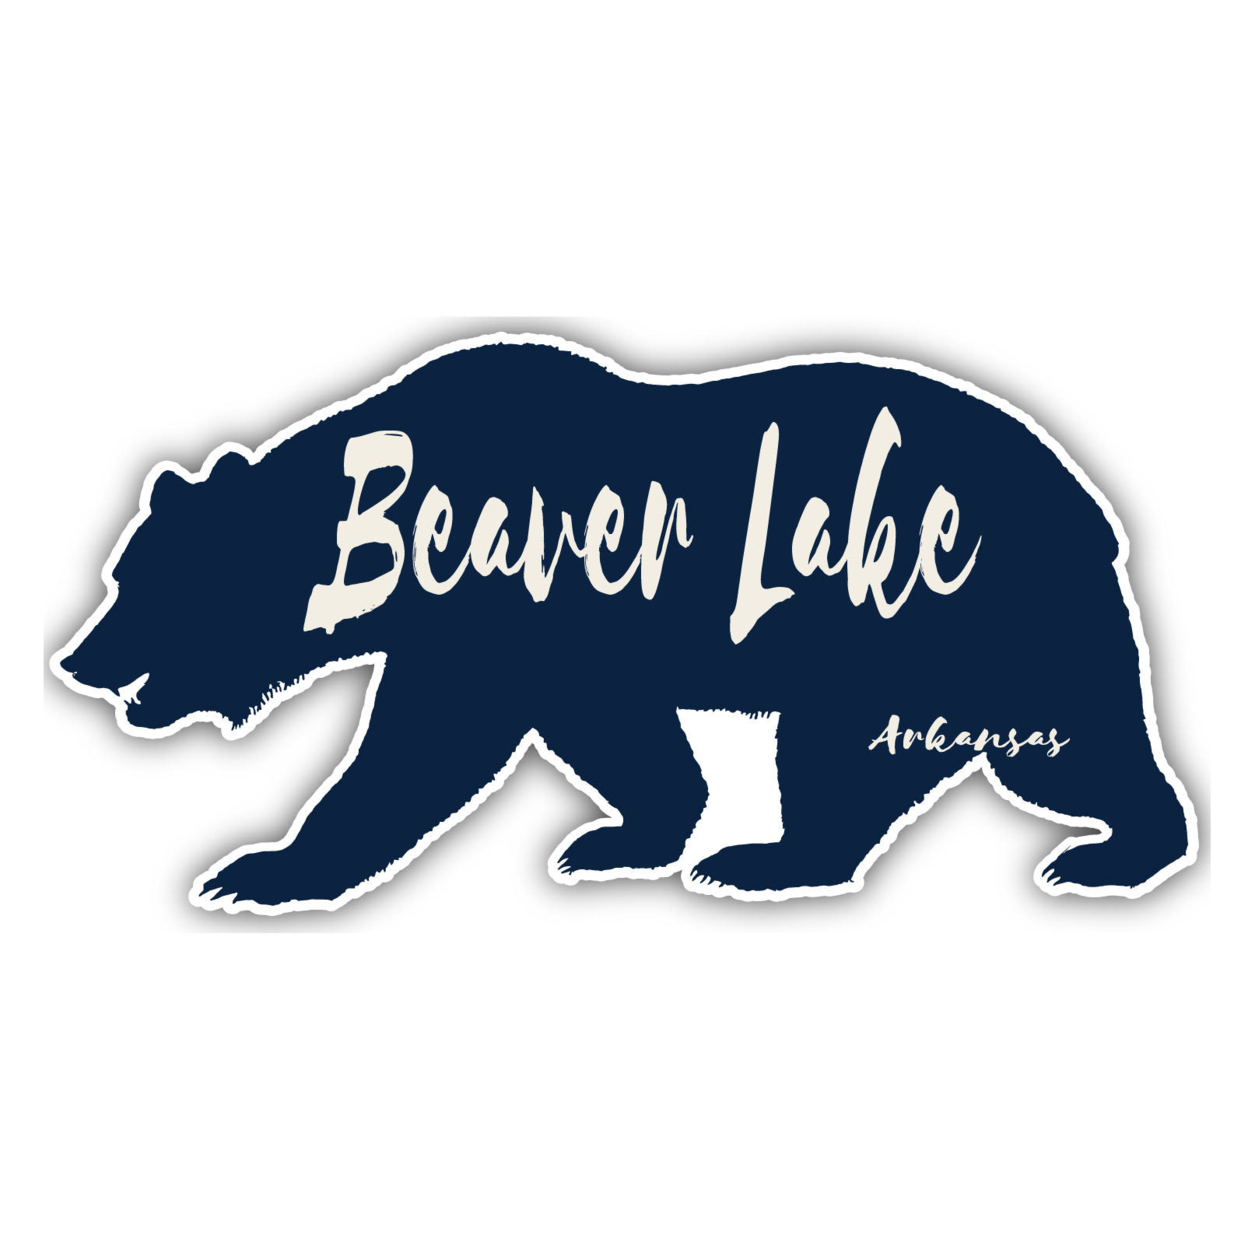 Beaver Lake Arkansas Souvenir Decorative Stickers (Choose Theme And Size) - Single Unit, 2-Inch, Adventures Awaits